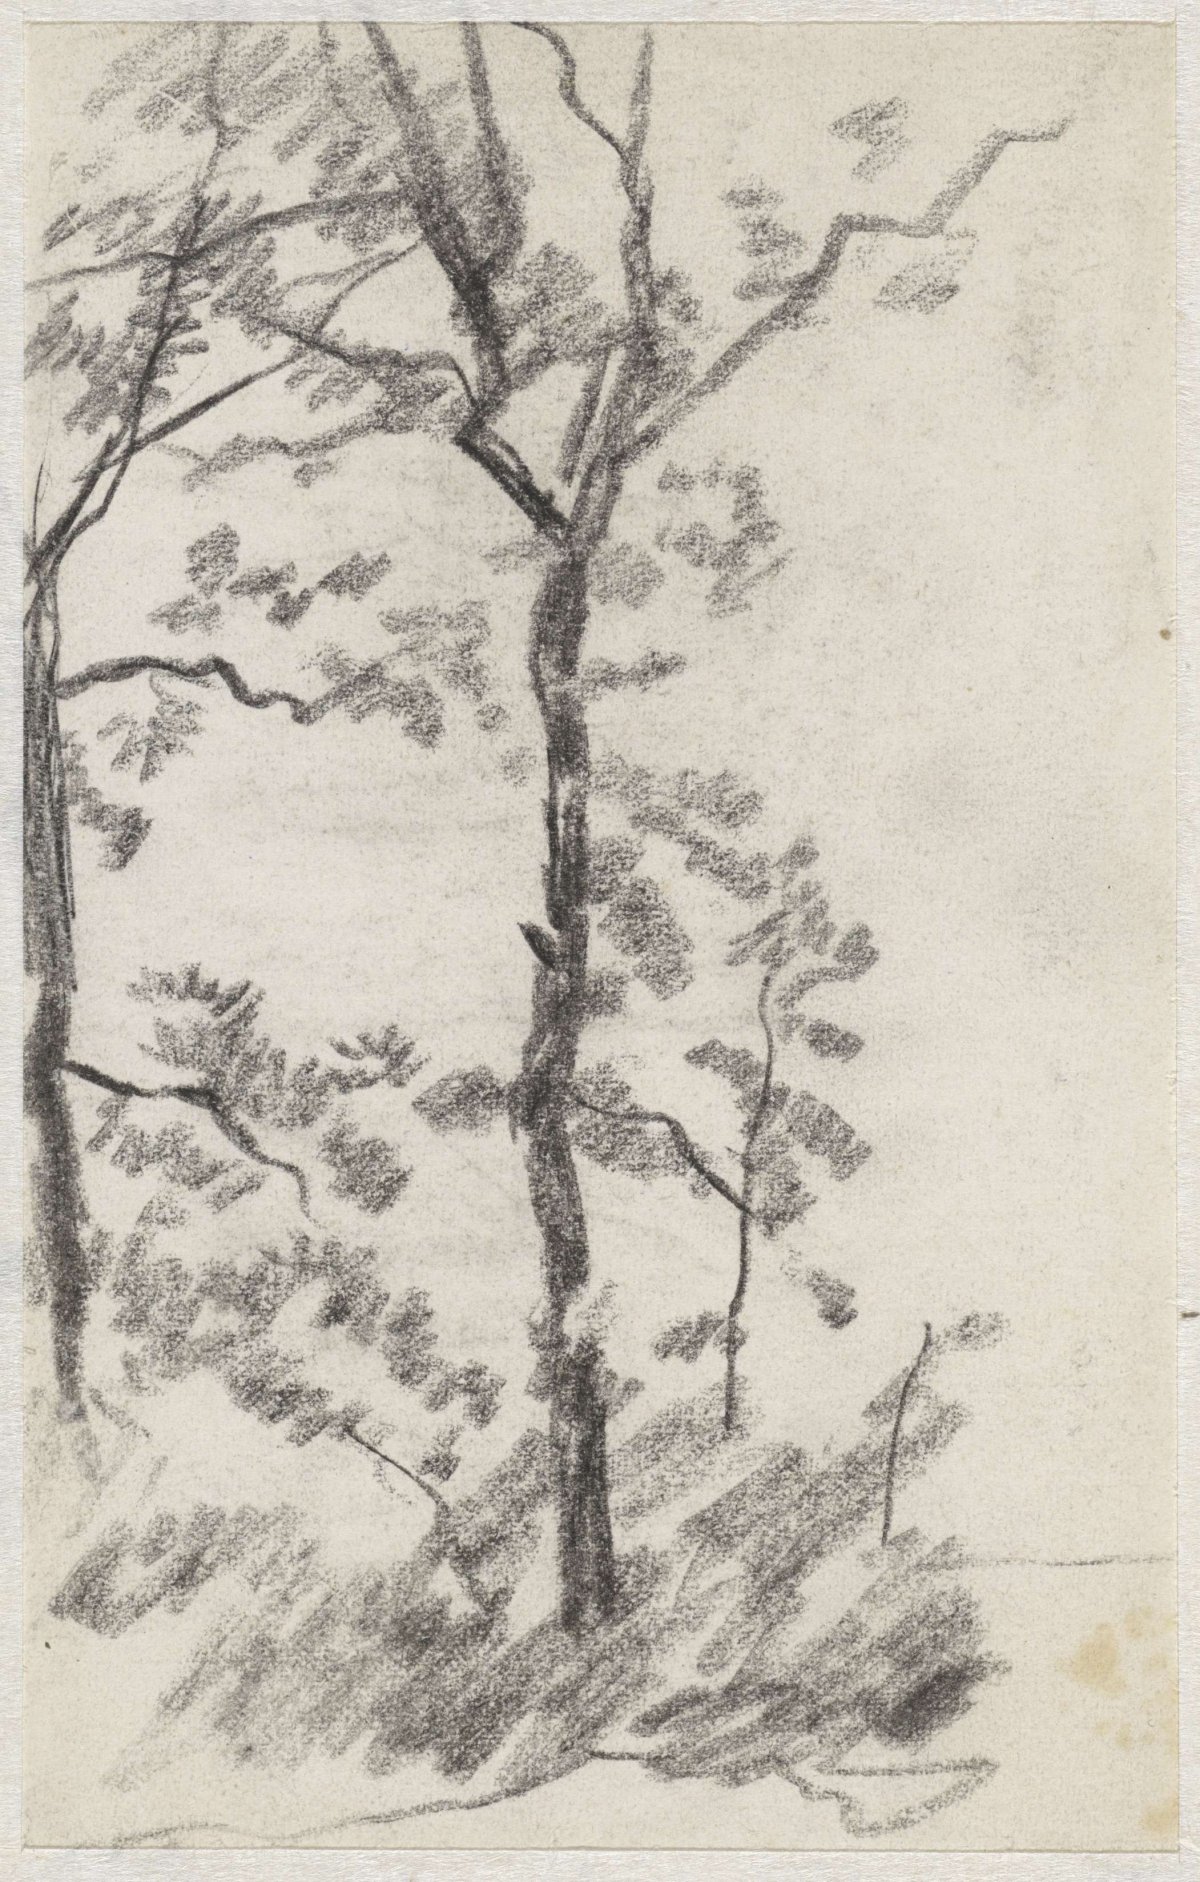 Tree study, Anton Mauve, 1848 - 1888